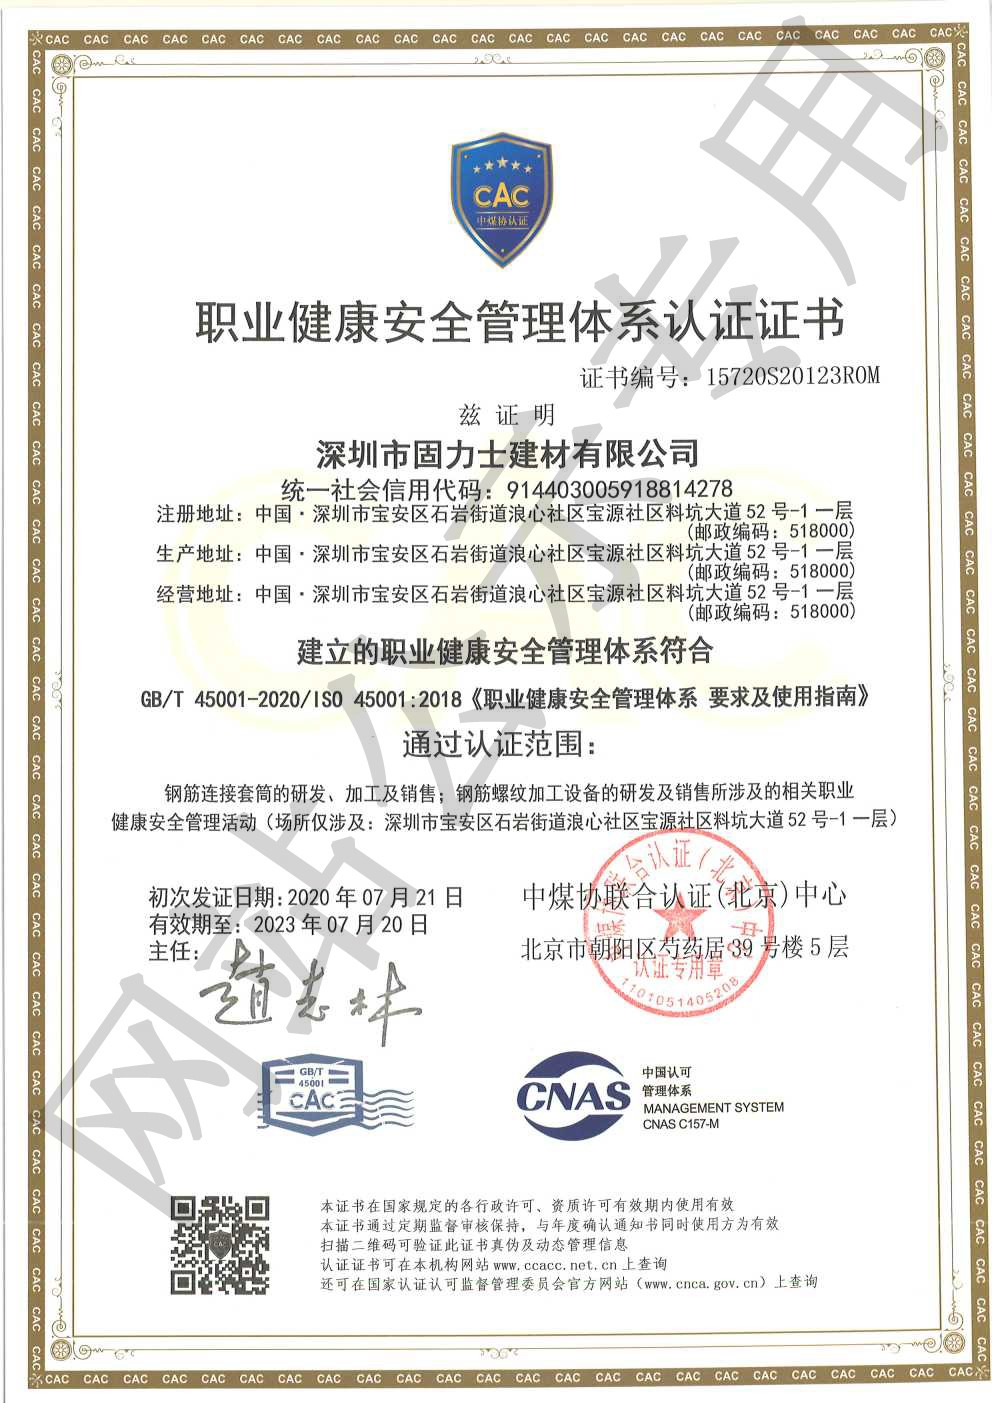 锡林郭勒ISO45001证书